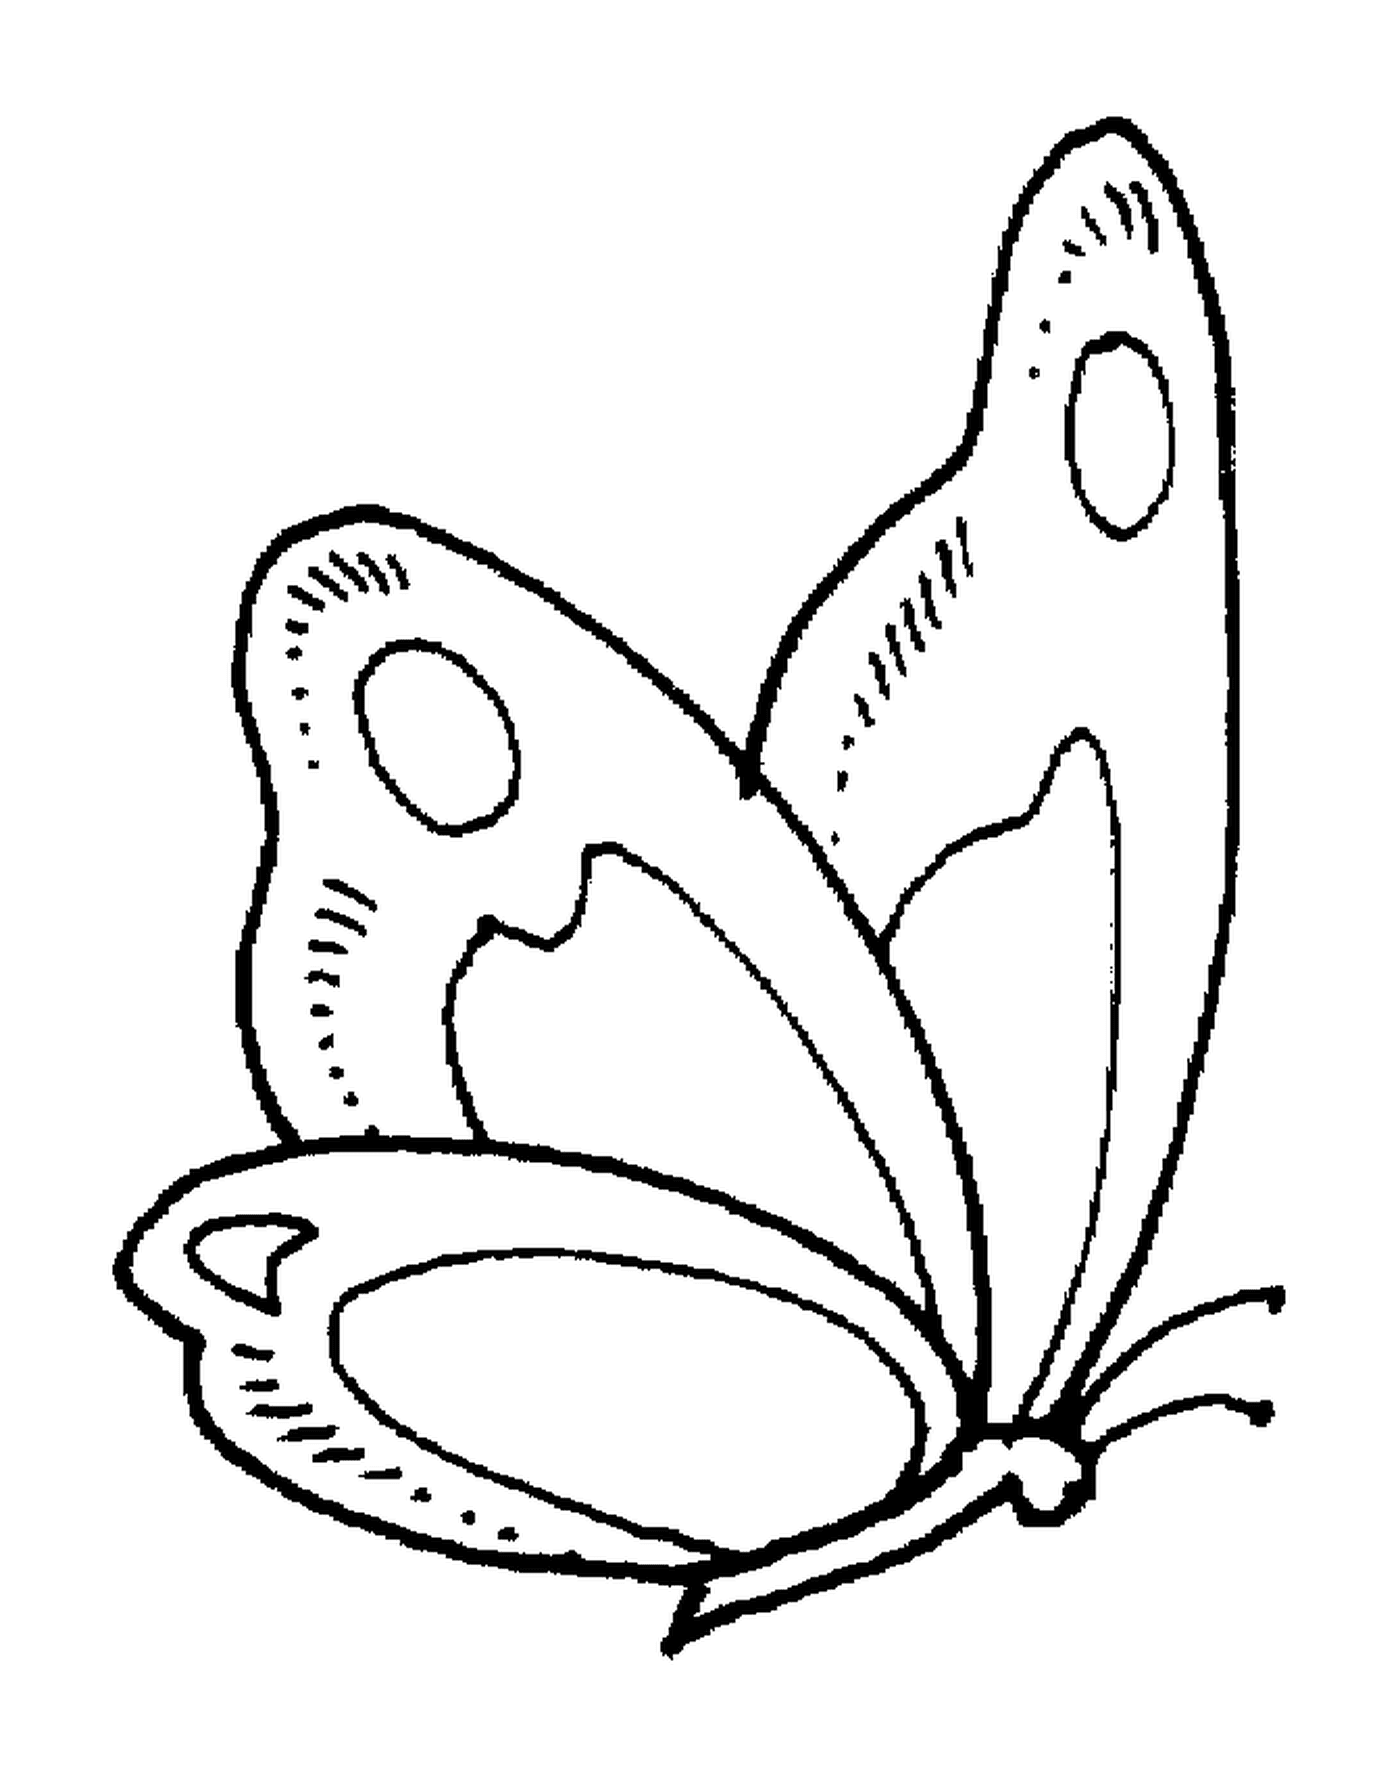  Бабочка с хрупкими крыльями 